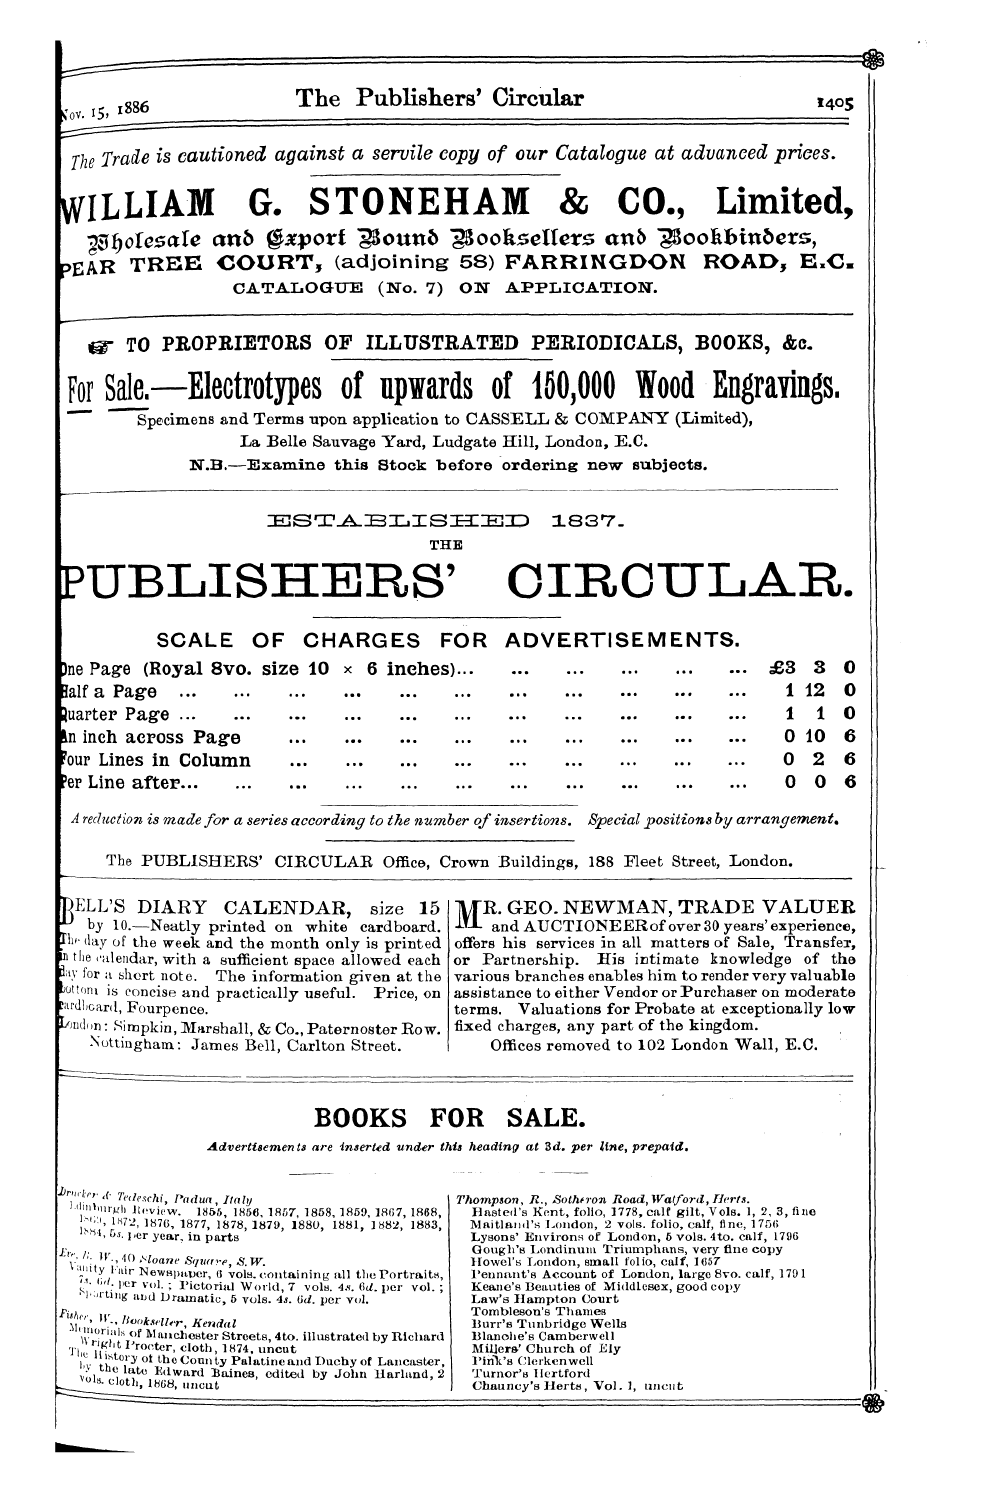 Publishers’ Circular (1880-1890): jS F Y, 1st edition - Gaa 1 W . The Publishers 1 Circular 1405